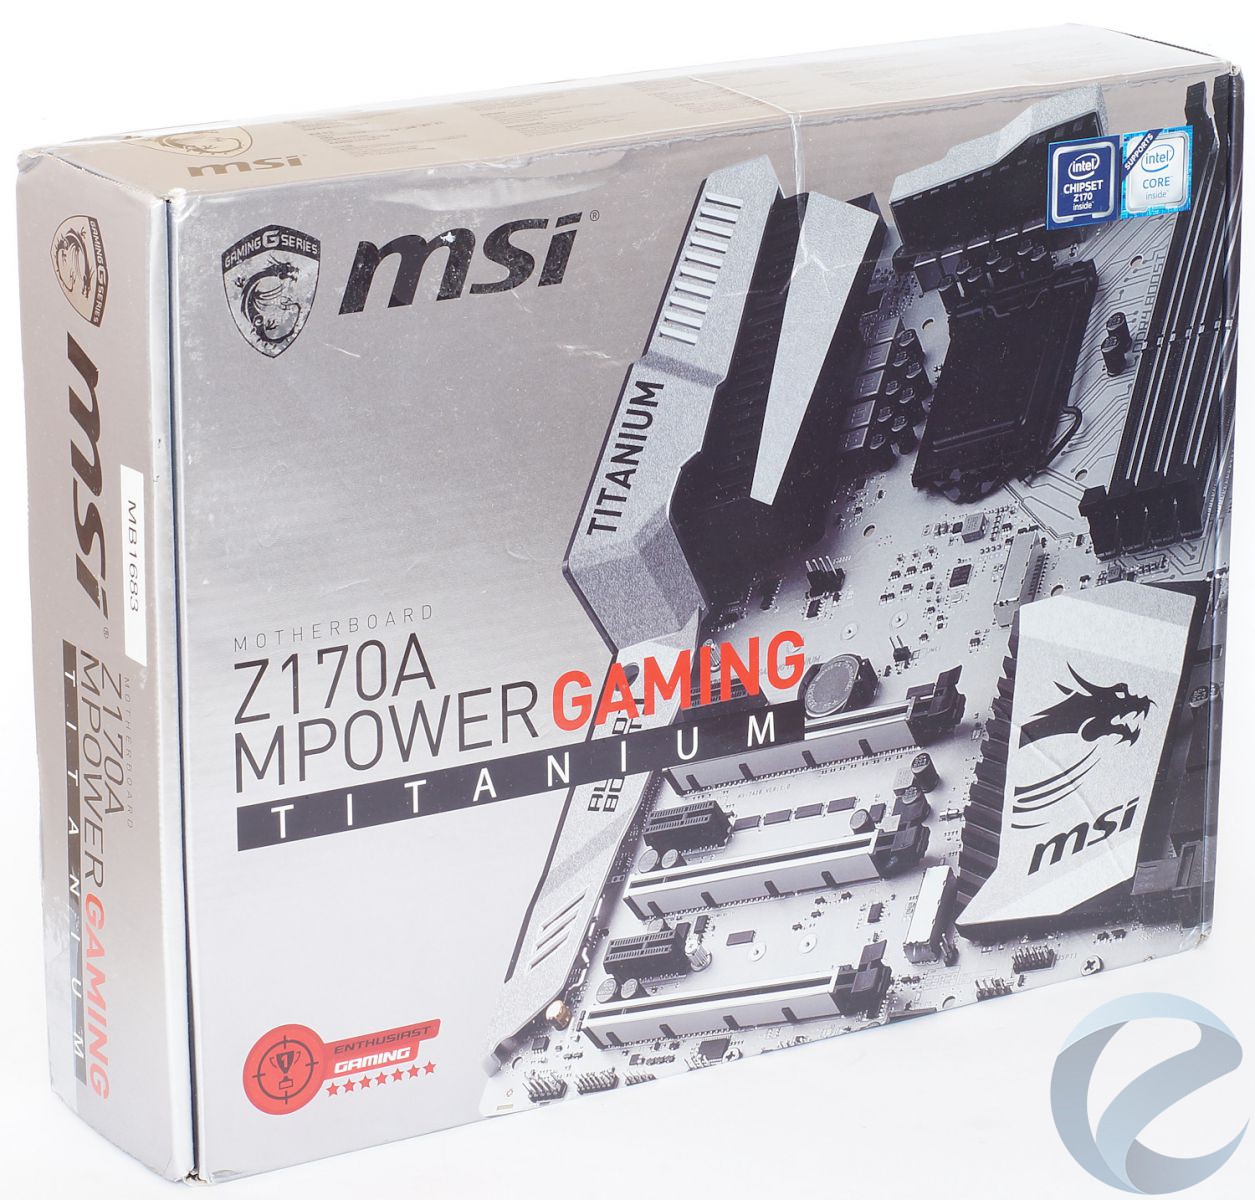 Упаковка и комплектация MSI Z170A MPOWER GAMING TITANIUM